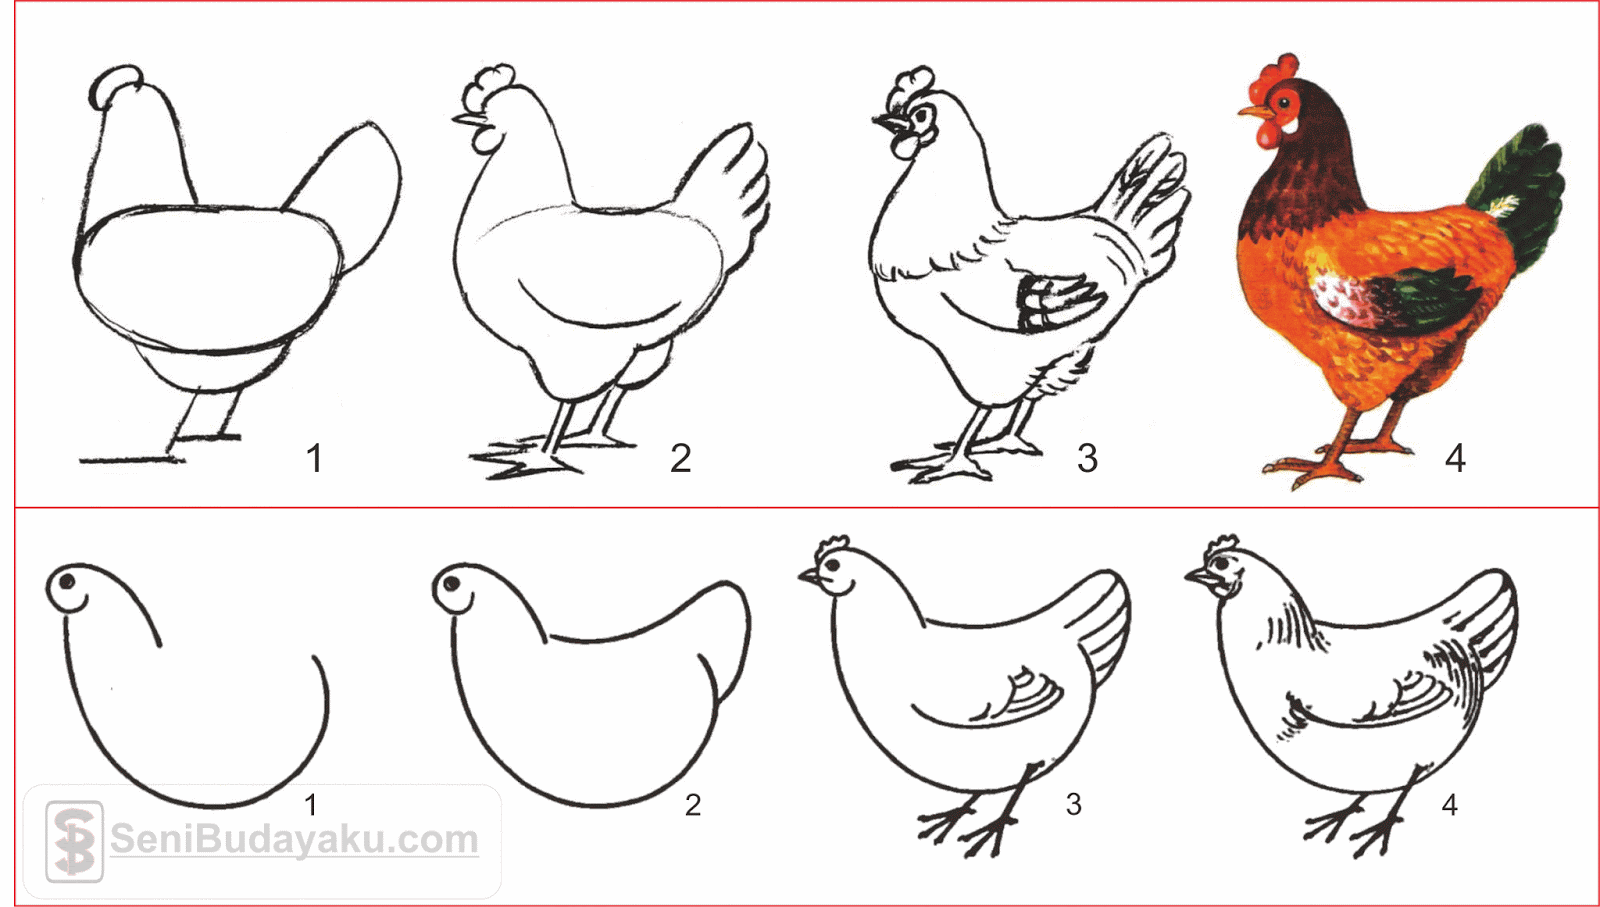 10 Cara Menggambar Ayam Dengan Mudah - Seni Budayaku